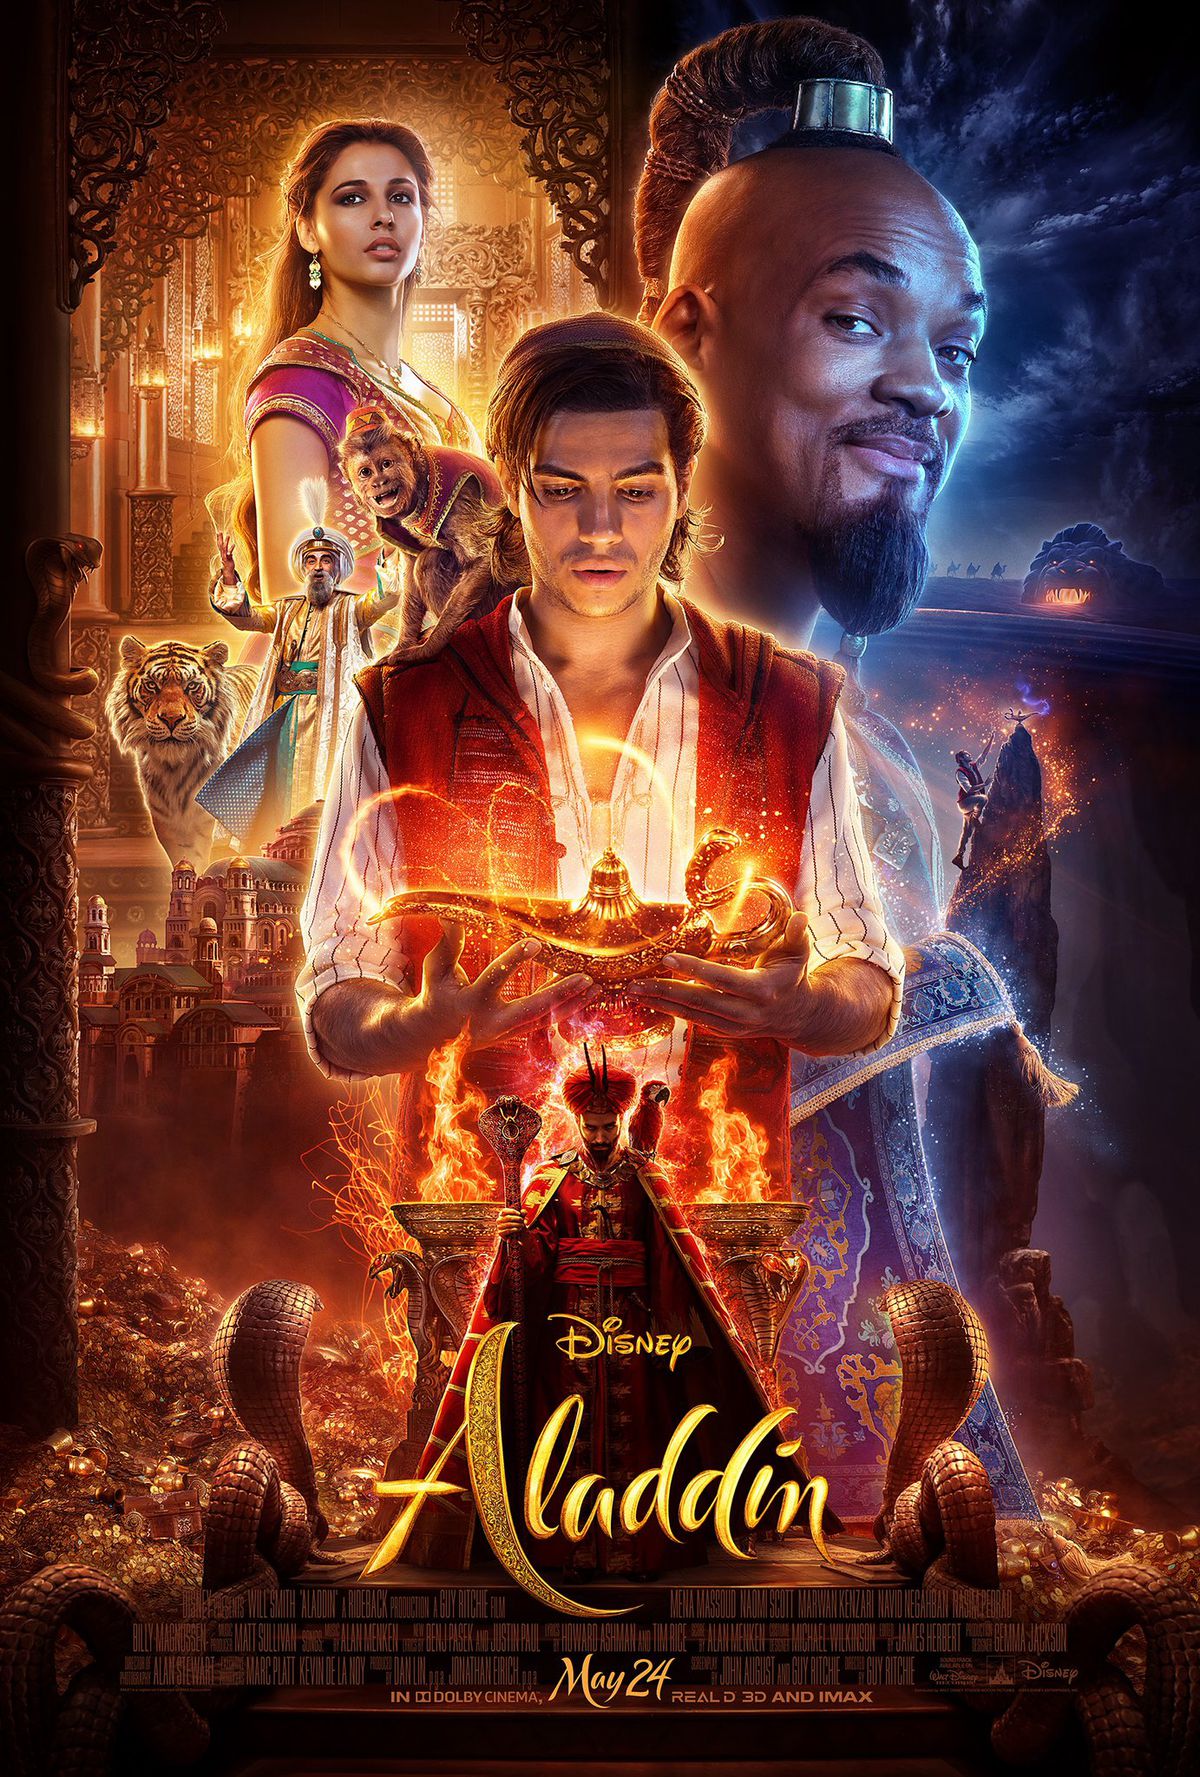 Poster for Disney’s live-action remake of Aladdin.